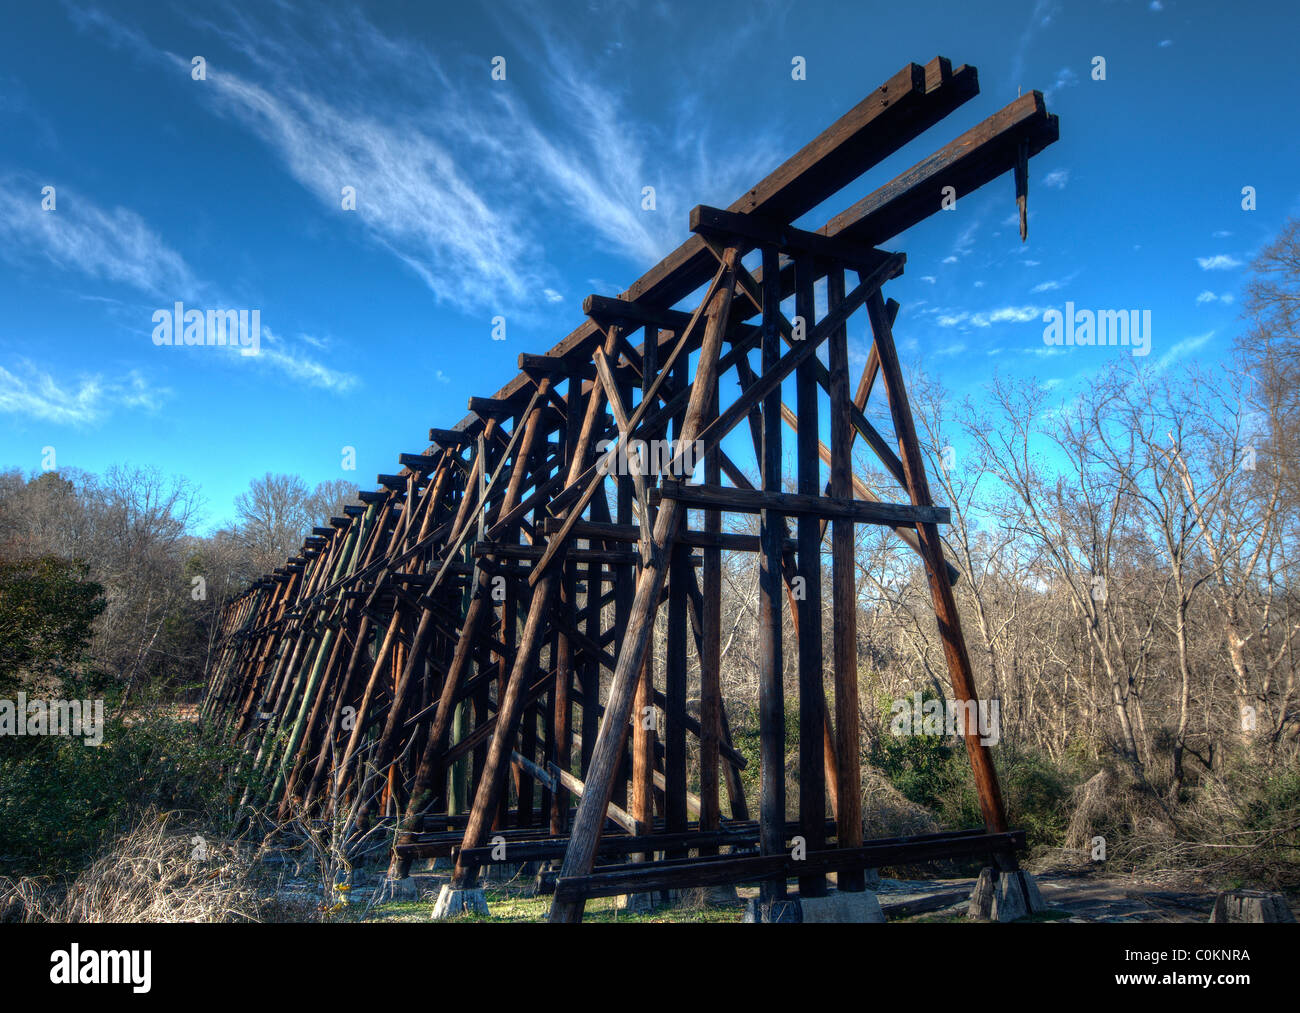 Abandoned elevated railroad tracks. Stock Photo